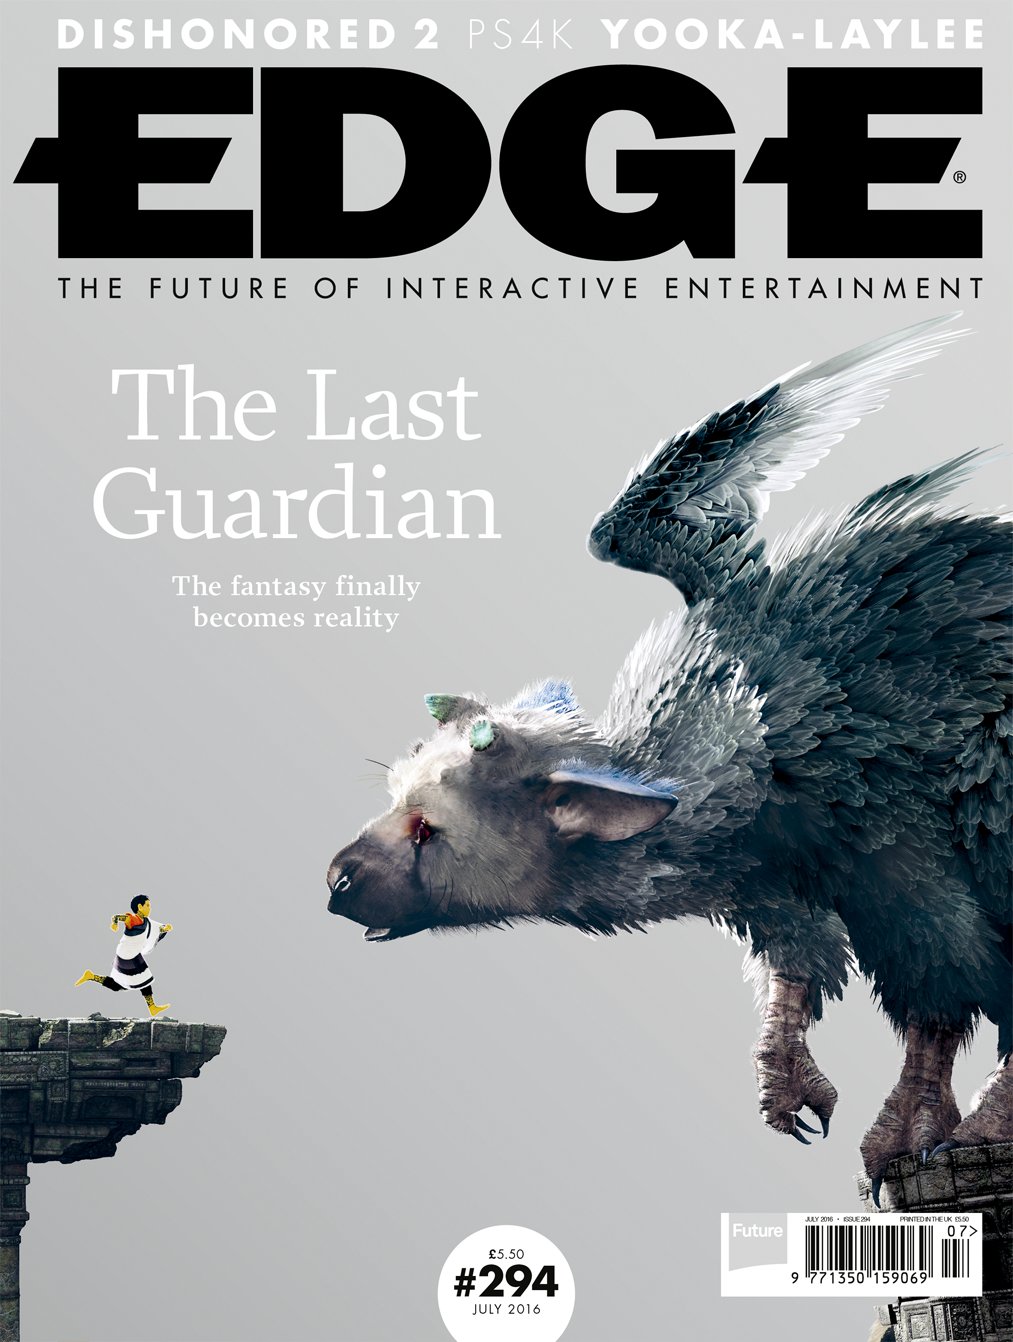 The Last Guardian - E3 2016 Trailer